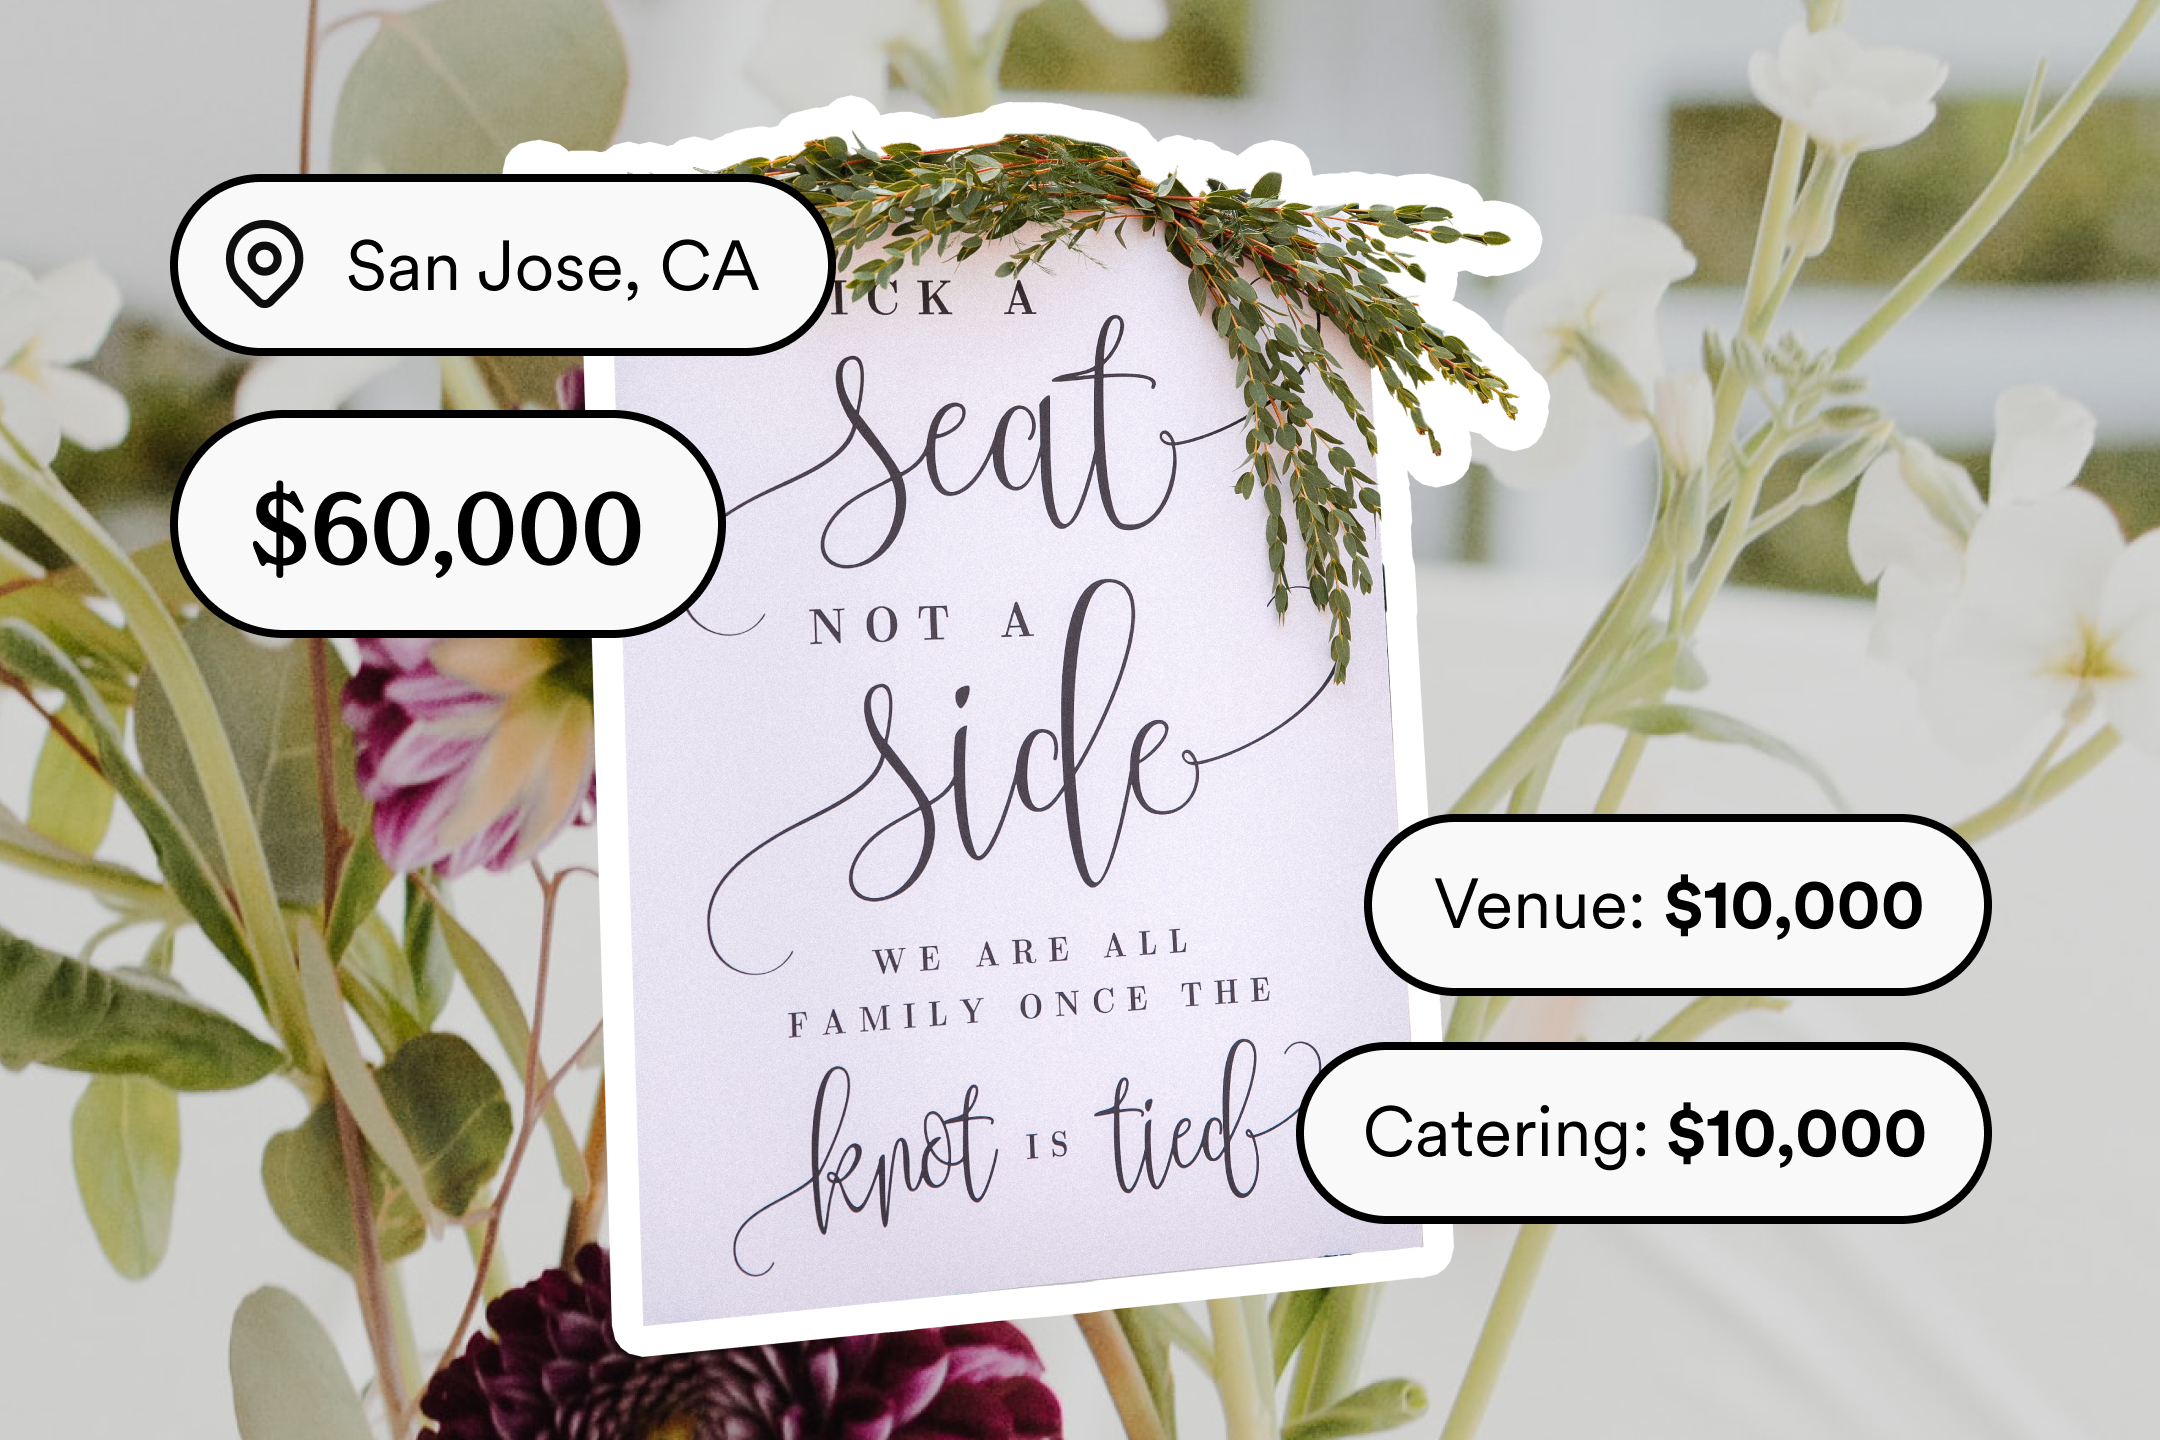 Budget bride' shares how she's saving money on wedding